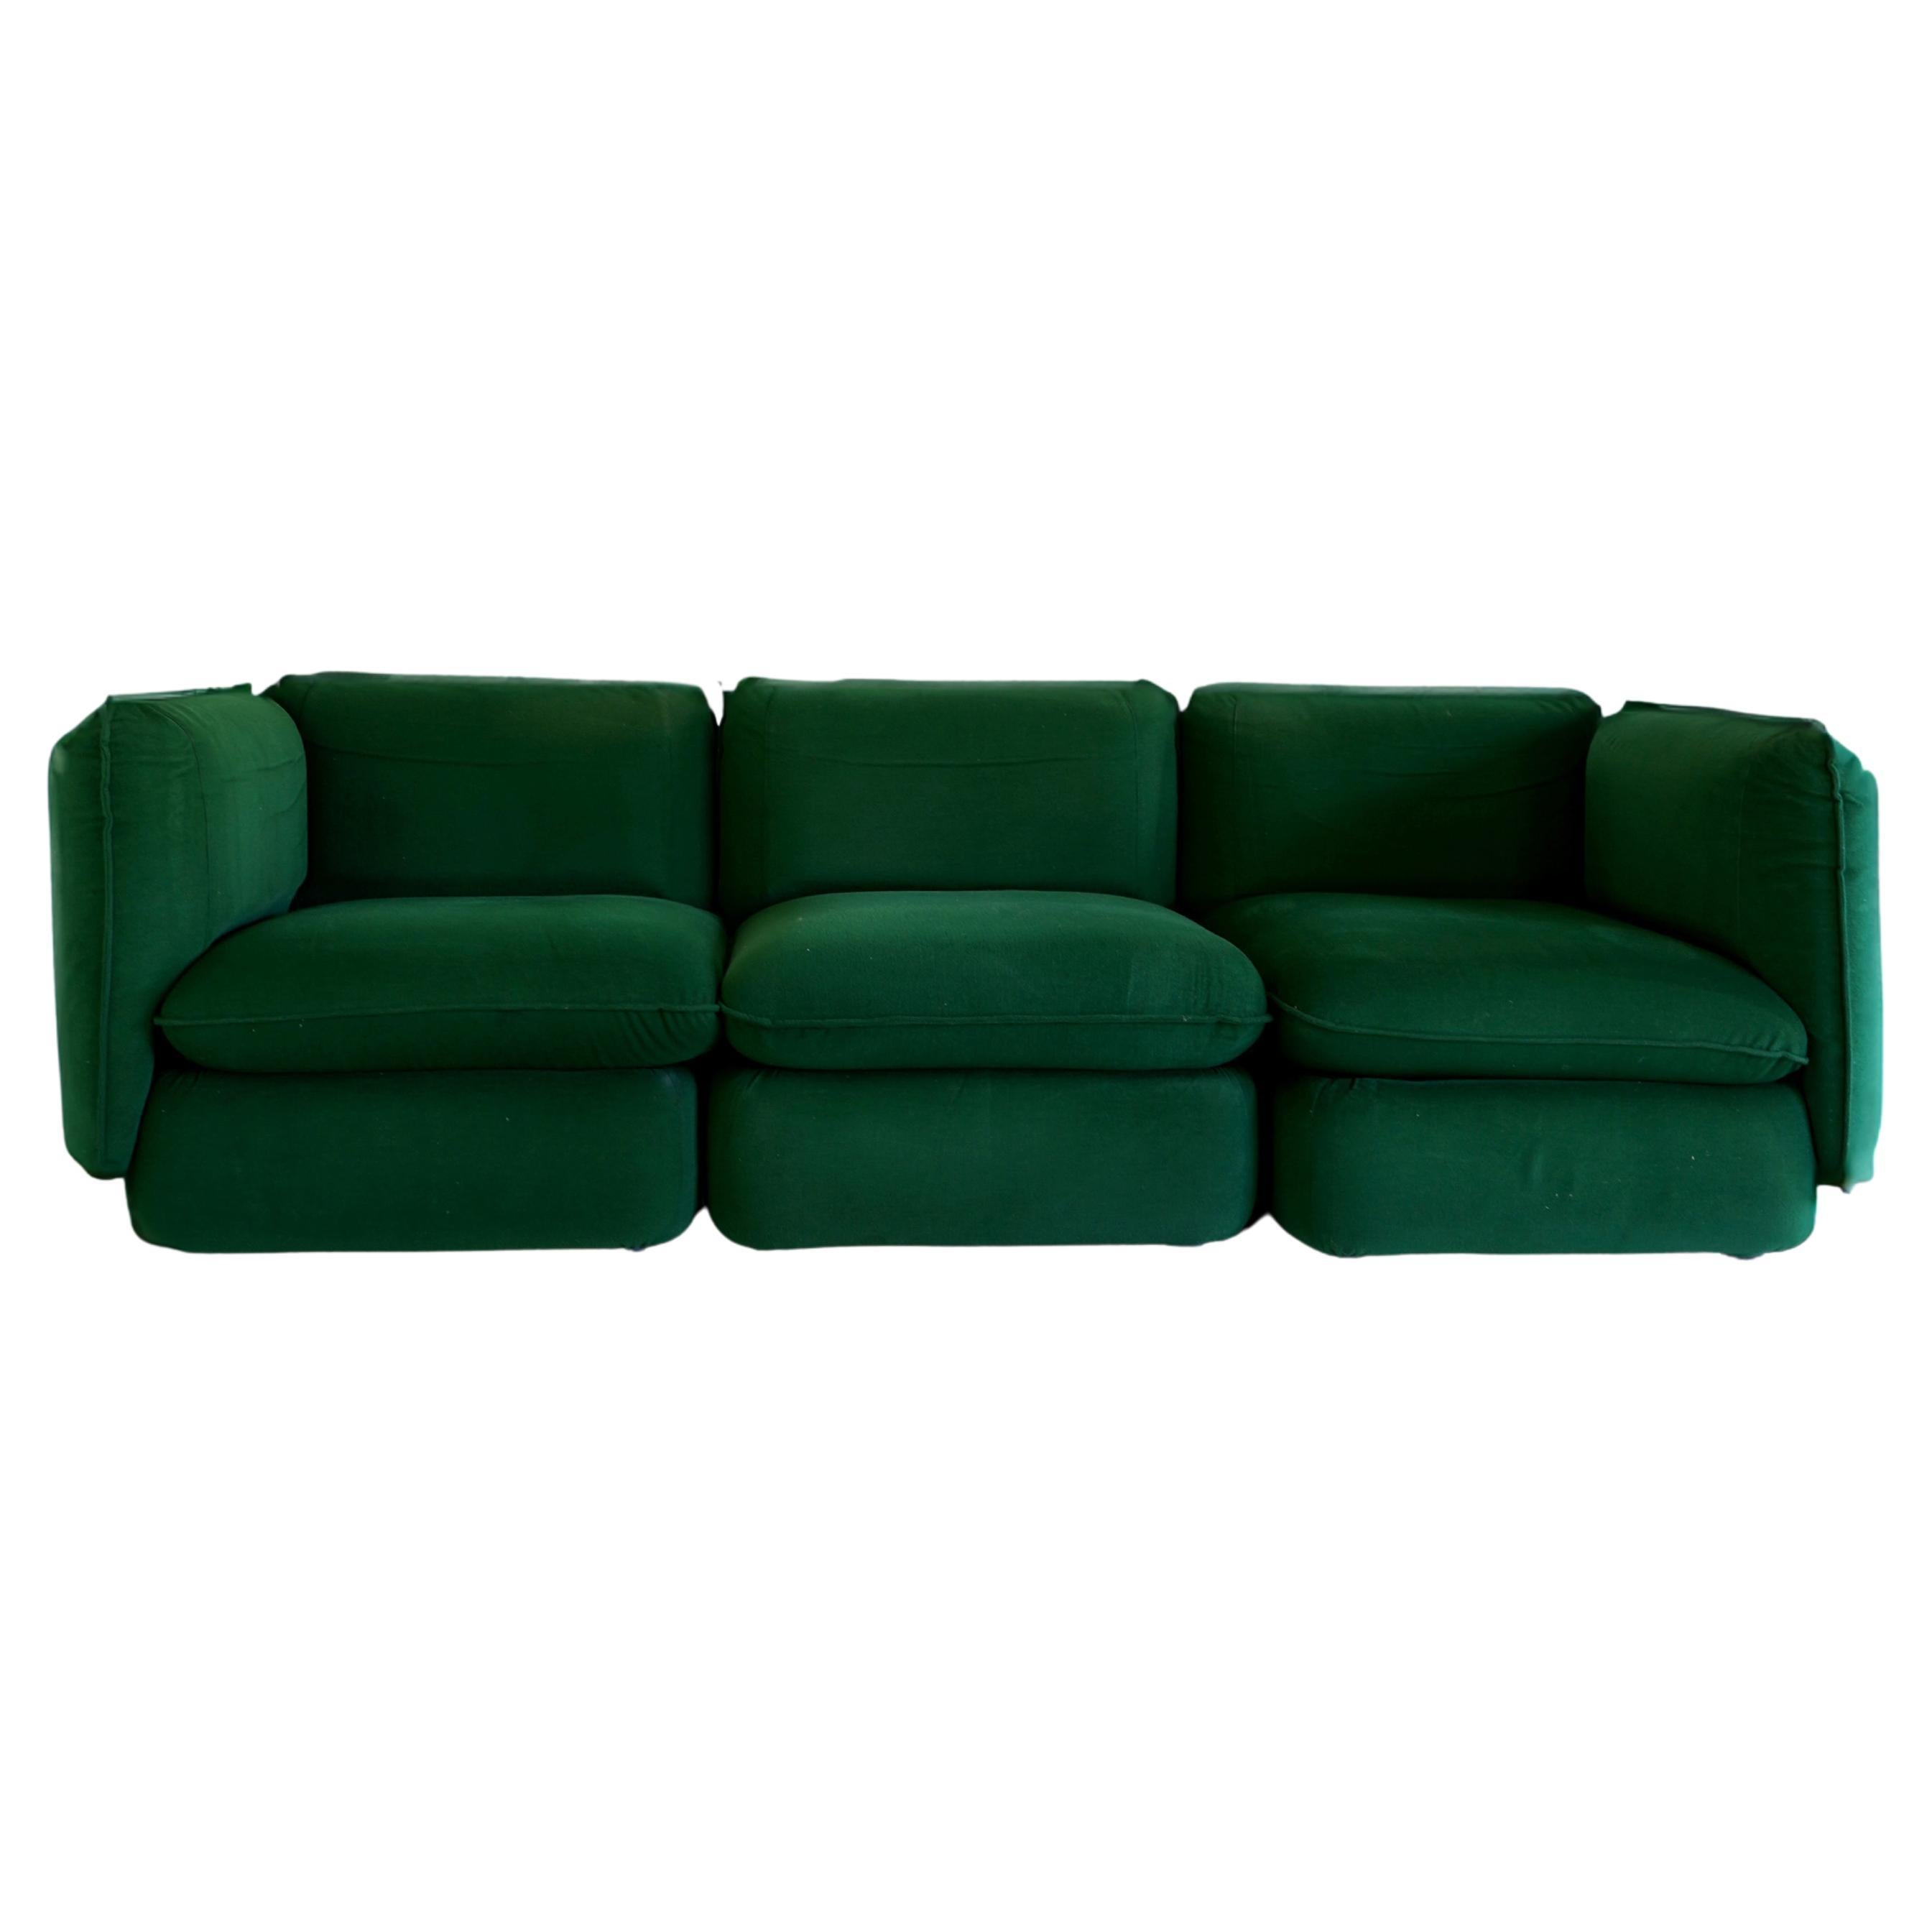 Modular 3 - Seat Sofa in Green Chenille, IPE Cavalli, Italy